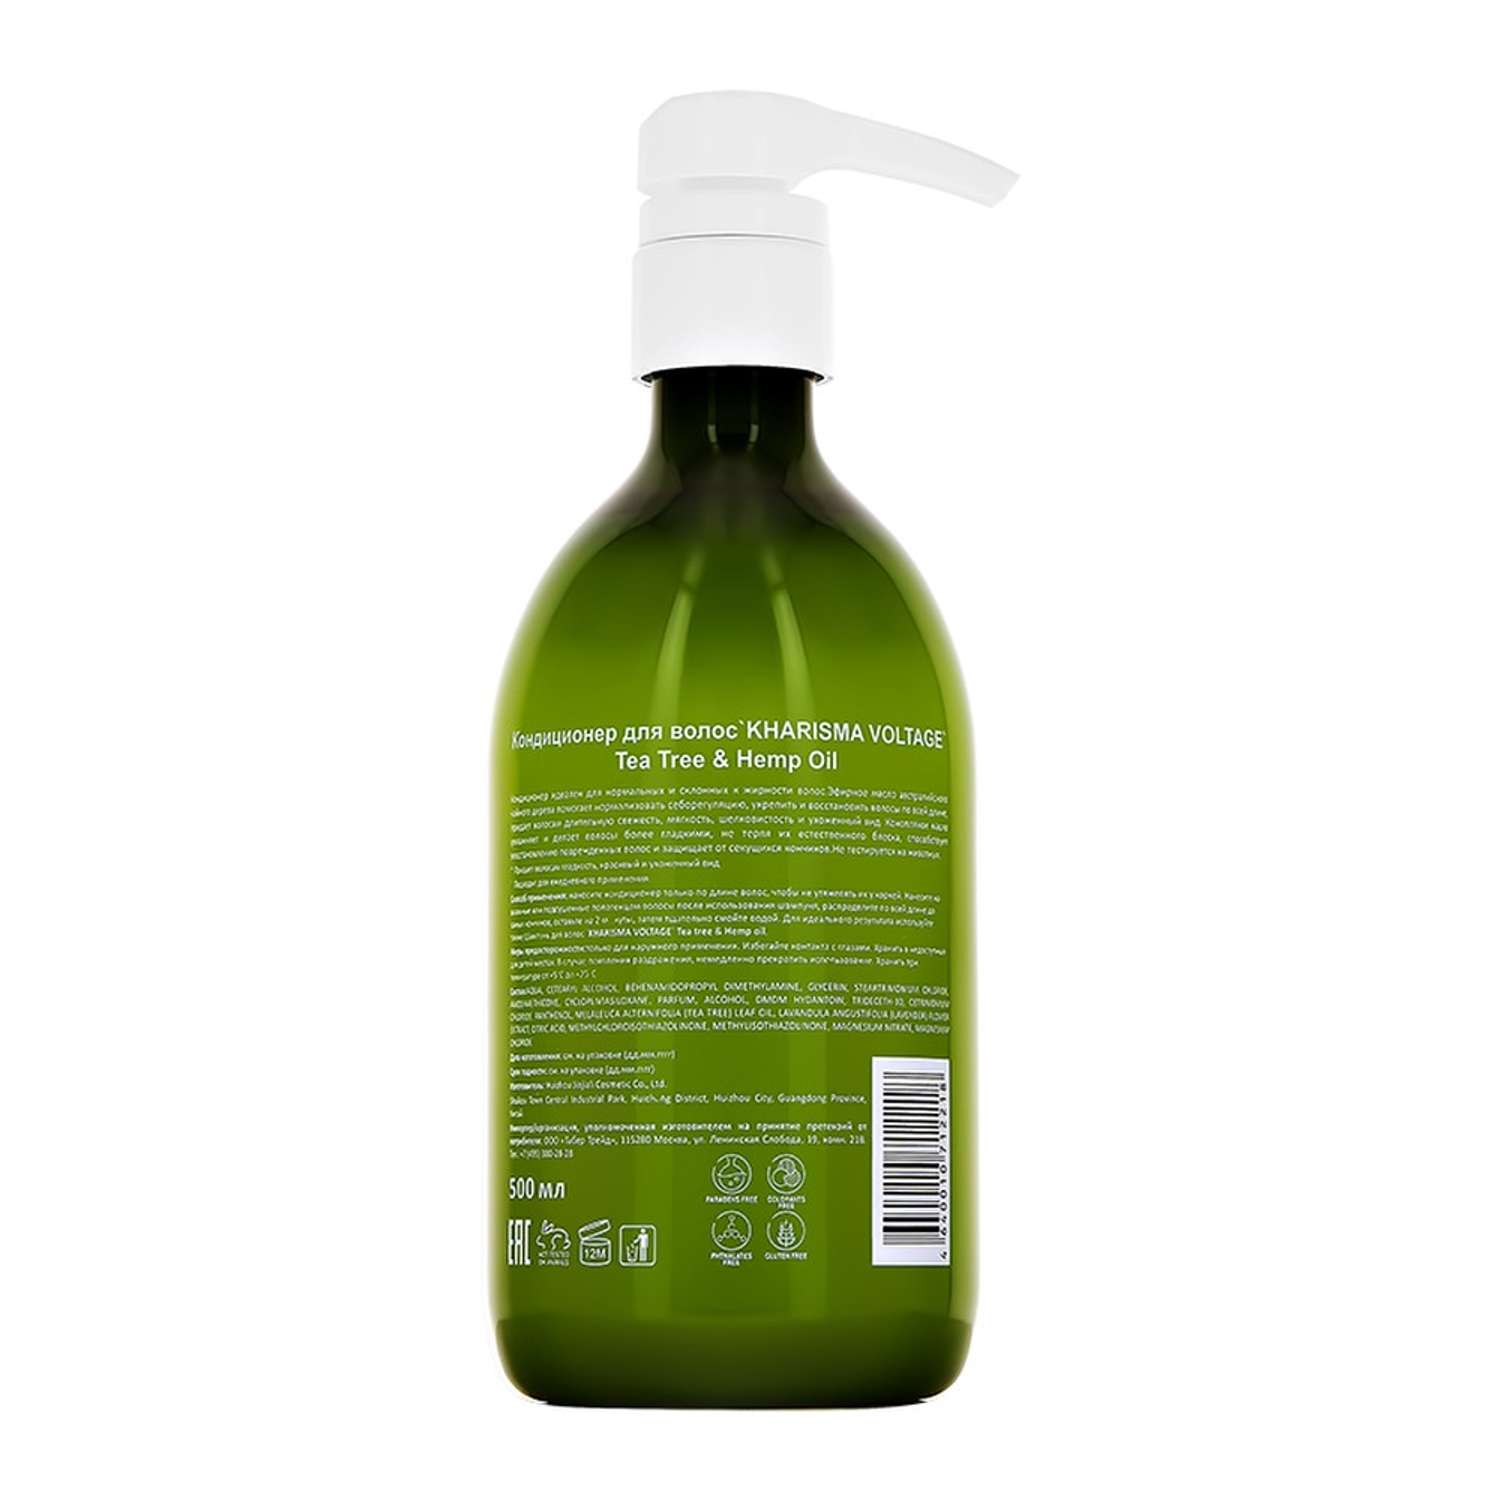 Кондиционер для волос Kharisma Voltage Tea tree and hemp oil 500 мл - фото 6